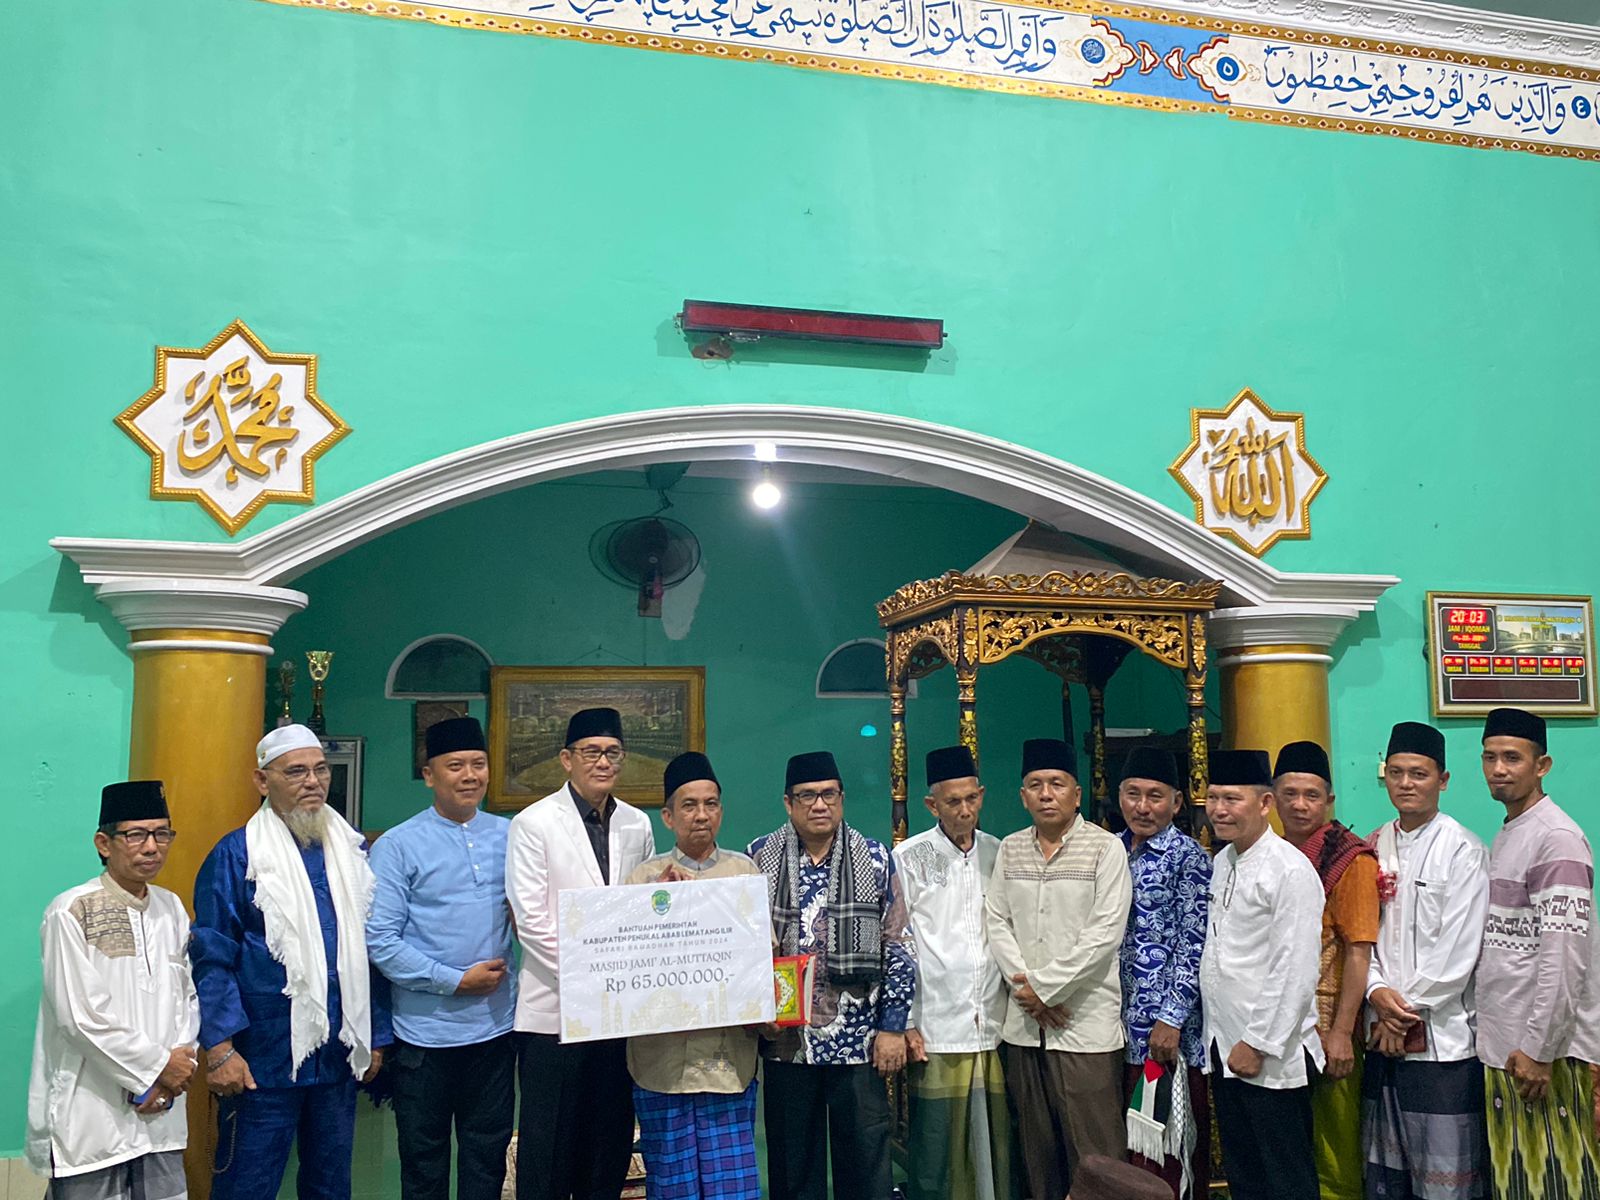 Kapolres PALI AKBP Khairu Nasrudin, S.I.K, M.H, Menghadiri kegiatan Safari Ramadan di Masjid Jami Al-Muttaqin Desa Raja